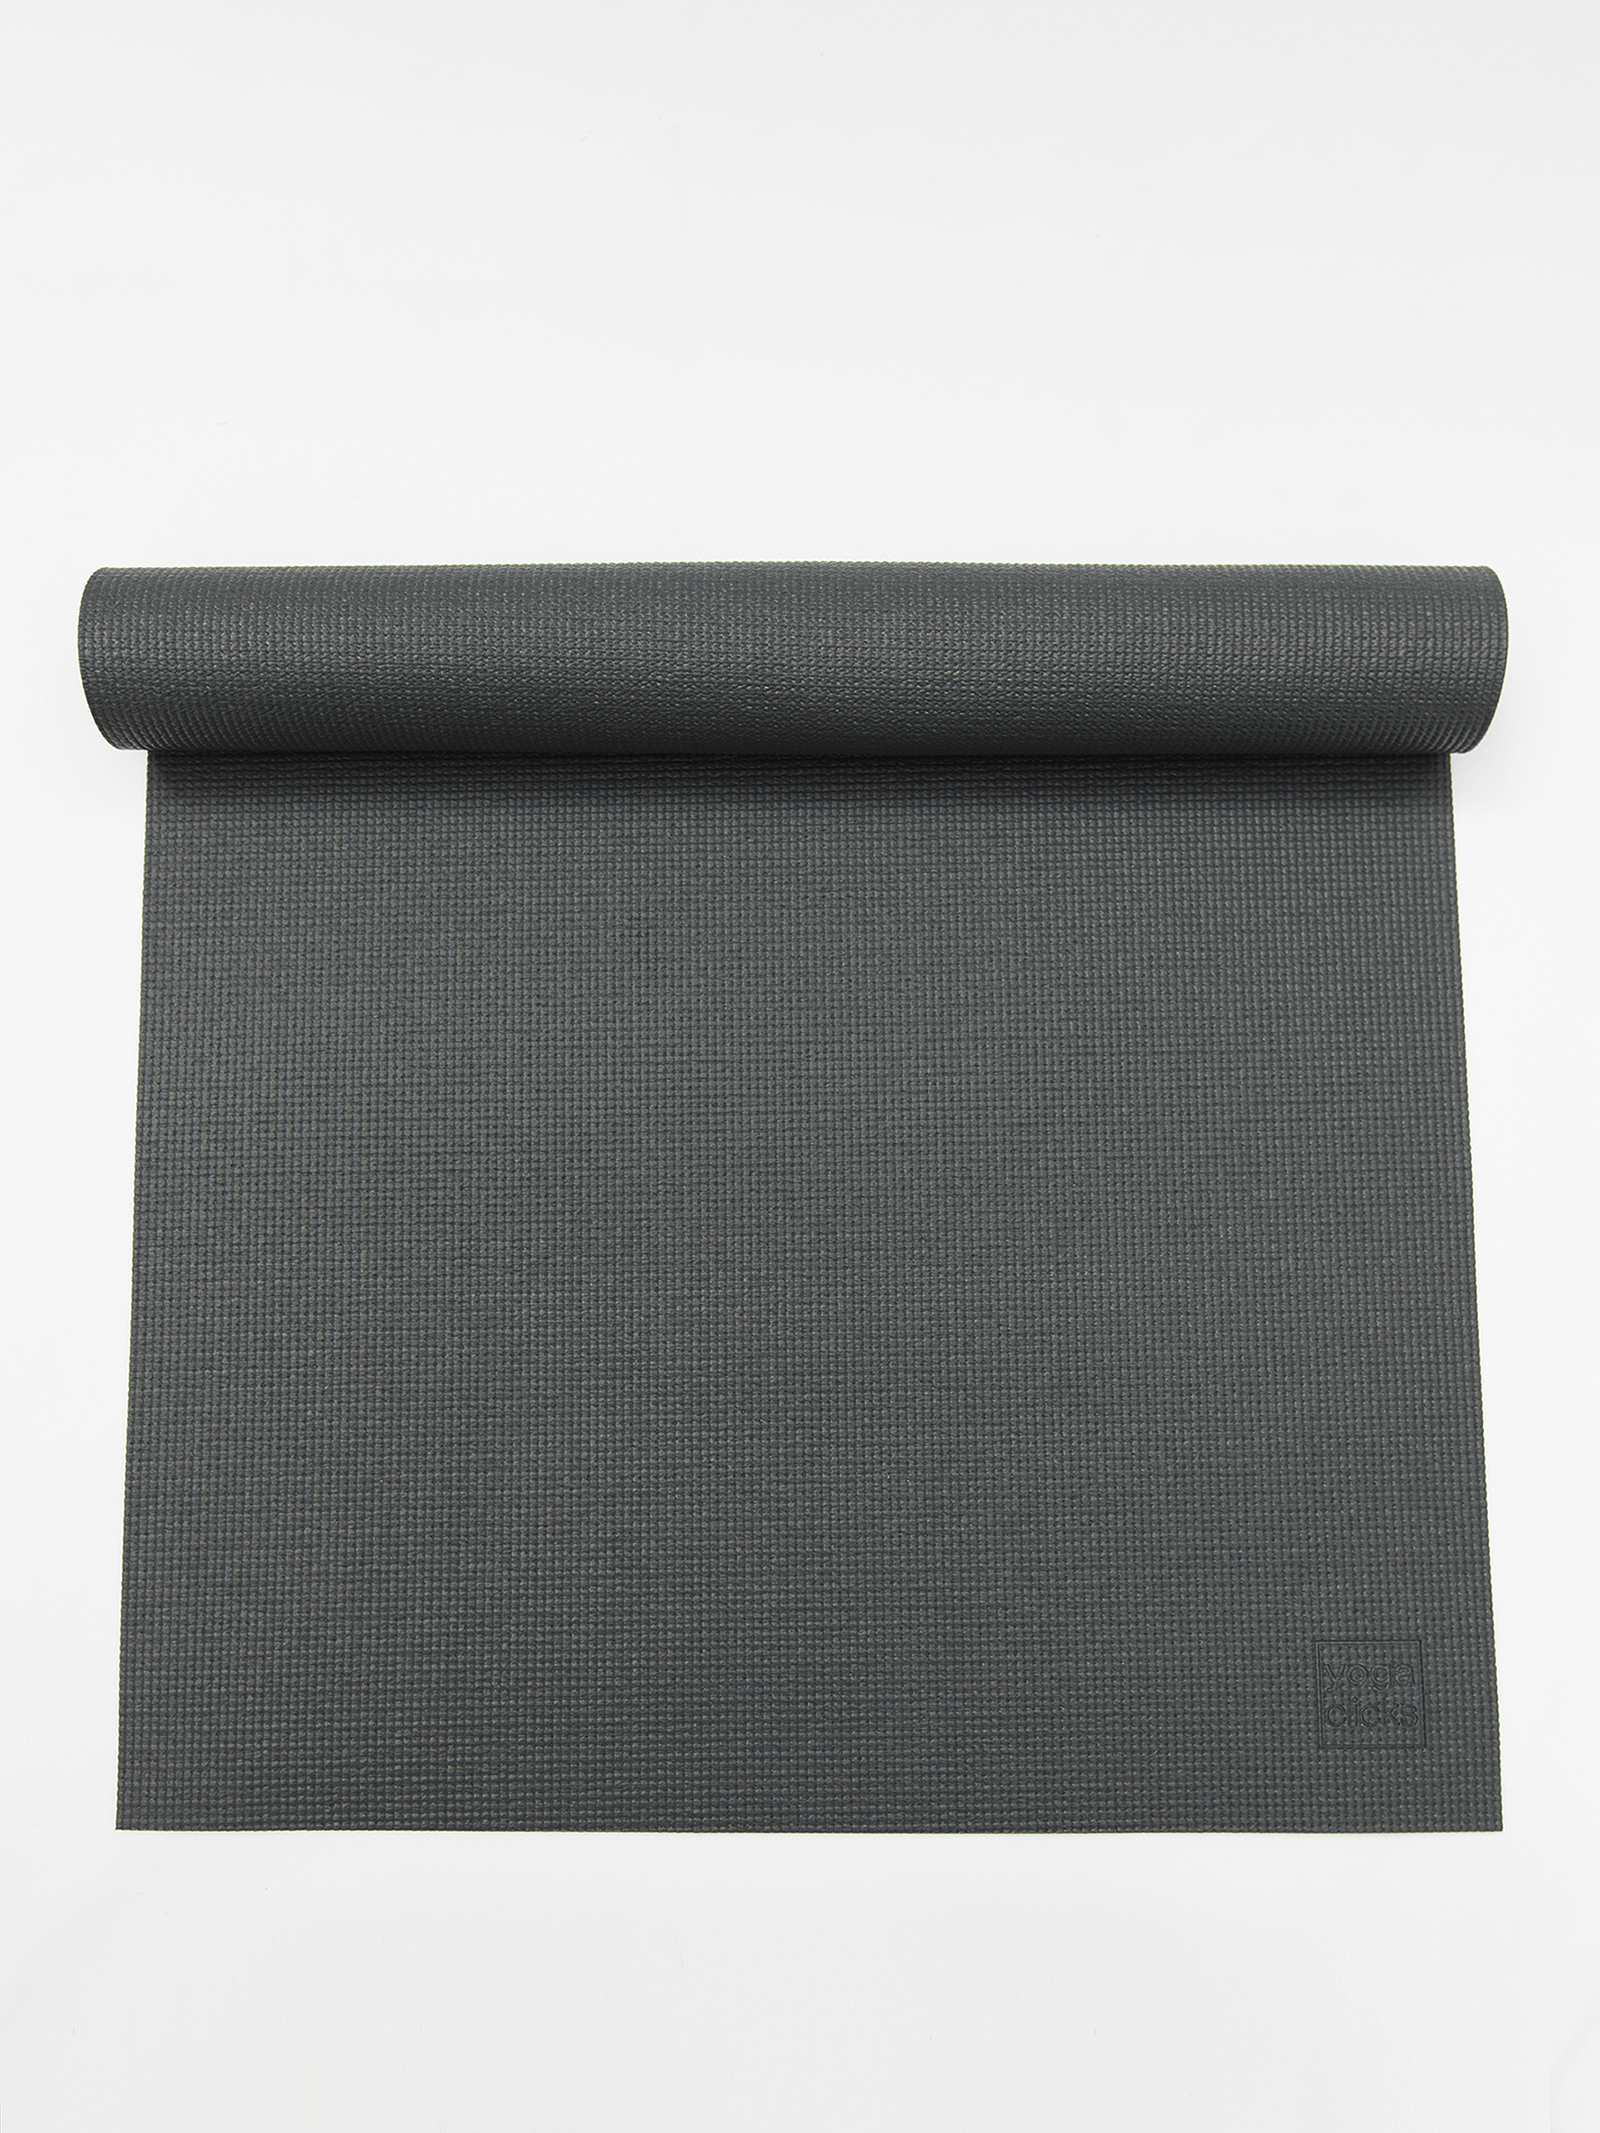 grey colour semi rolled wholesale mat